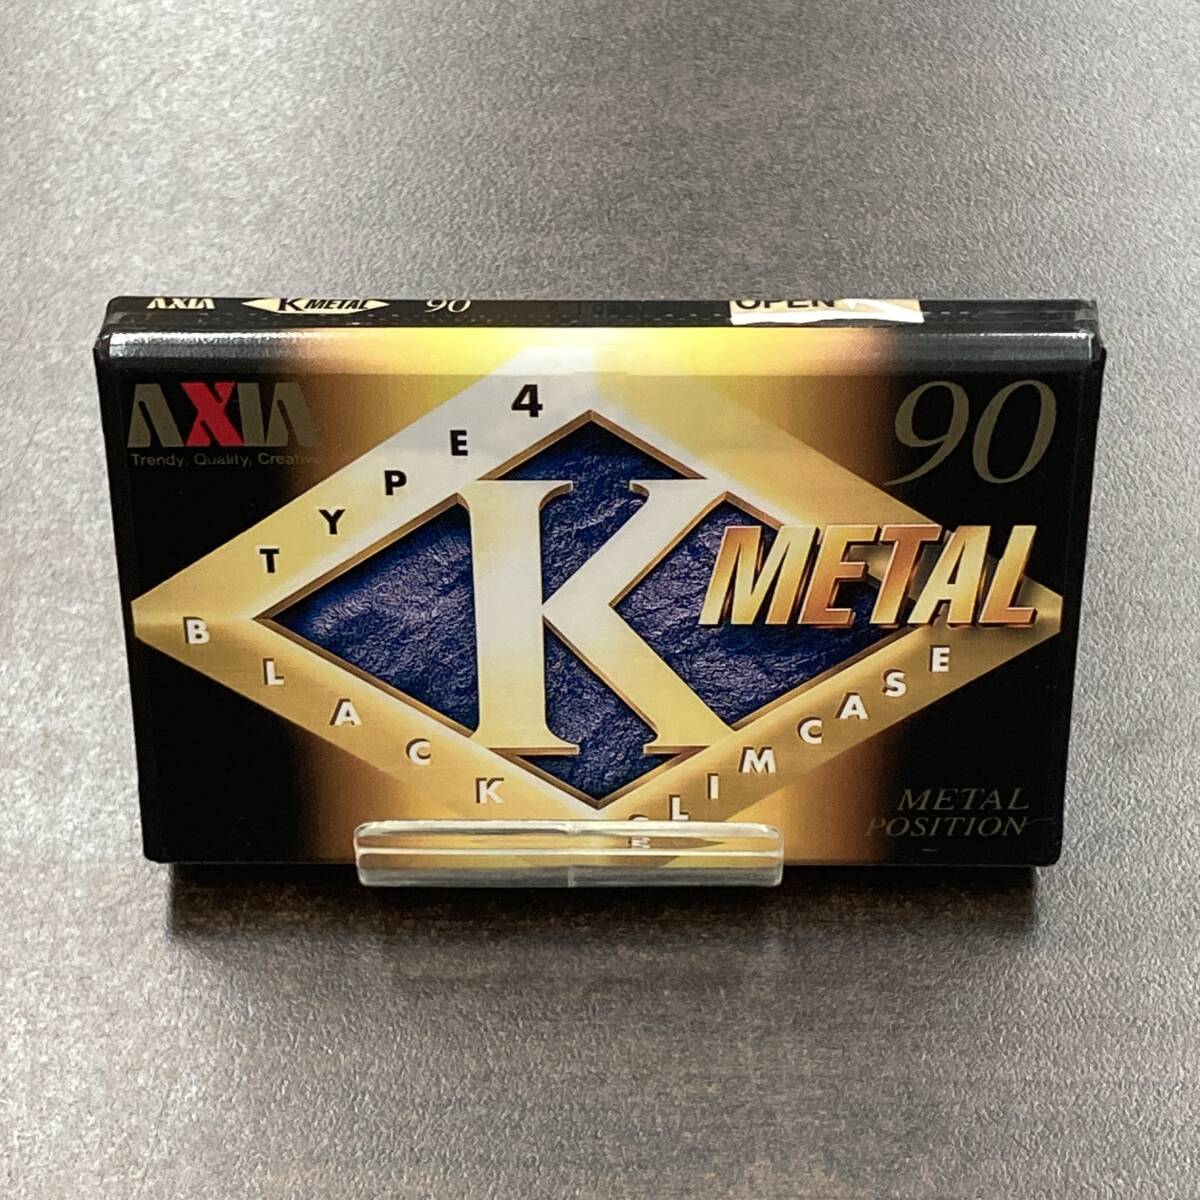 1947N 未使用 アクシア K METAL 90分 メタル 1本 カセットテープ/One AXIA Type IV Metal Position unused Audio Cassetteの画像1